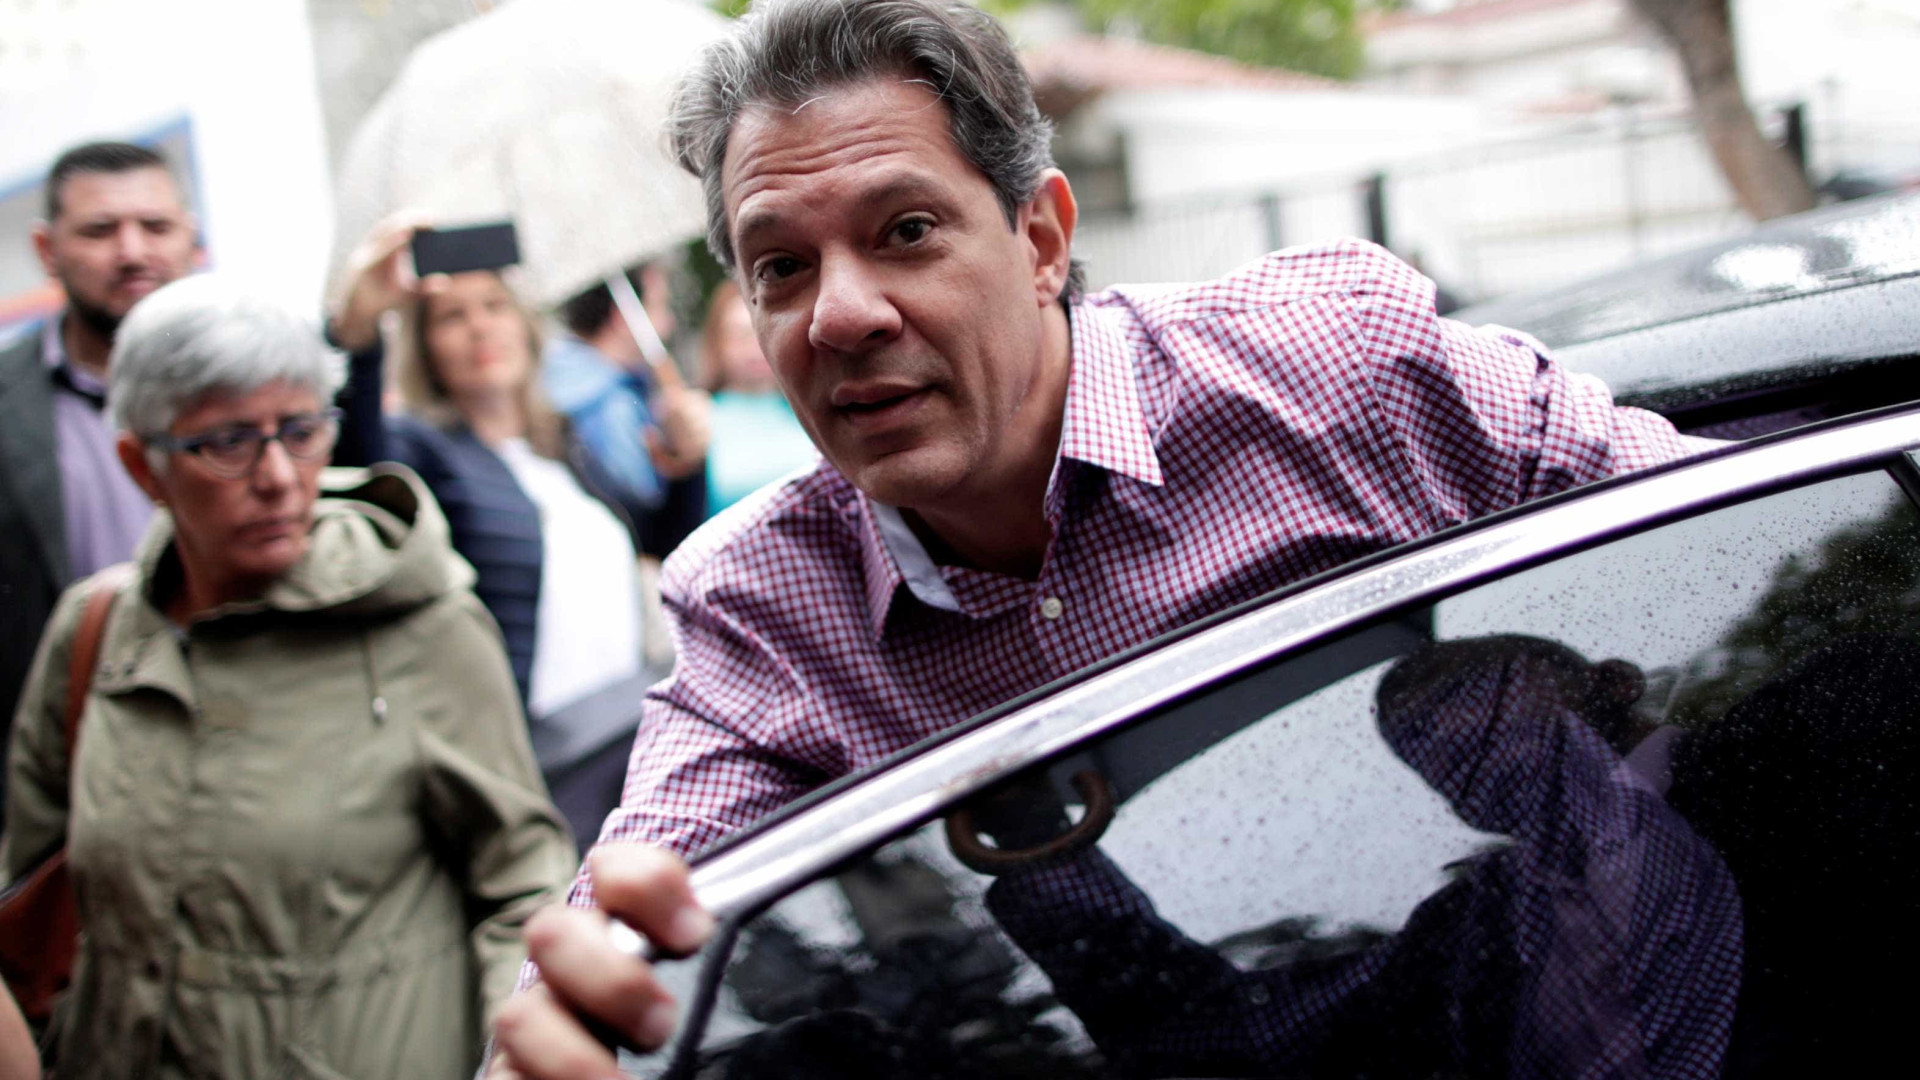 Na TV, Haddad mostrará incoerência de Bolsonaro sobre Bolsa Família